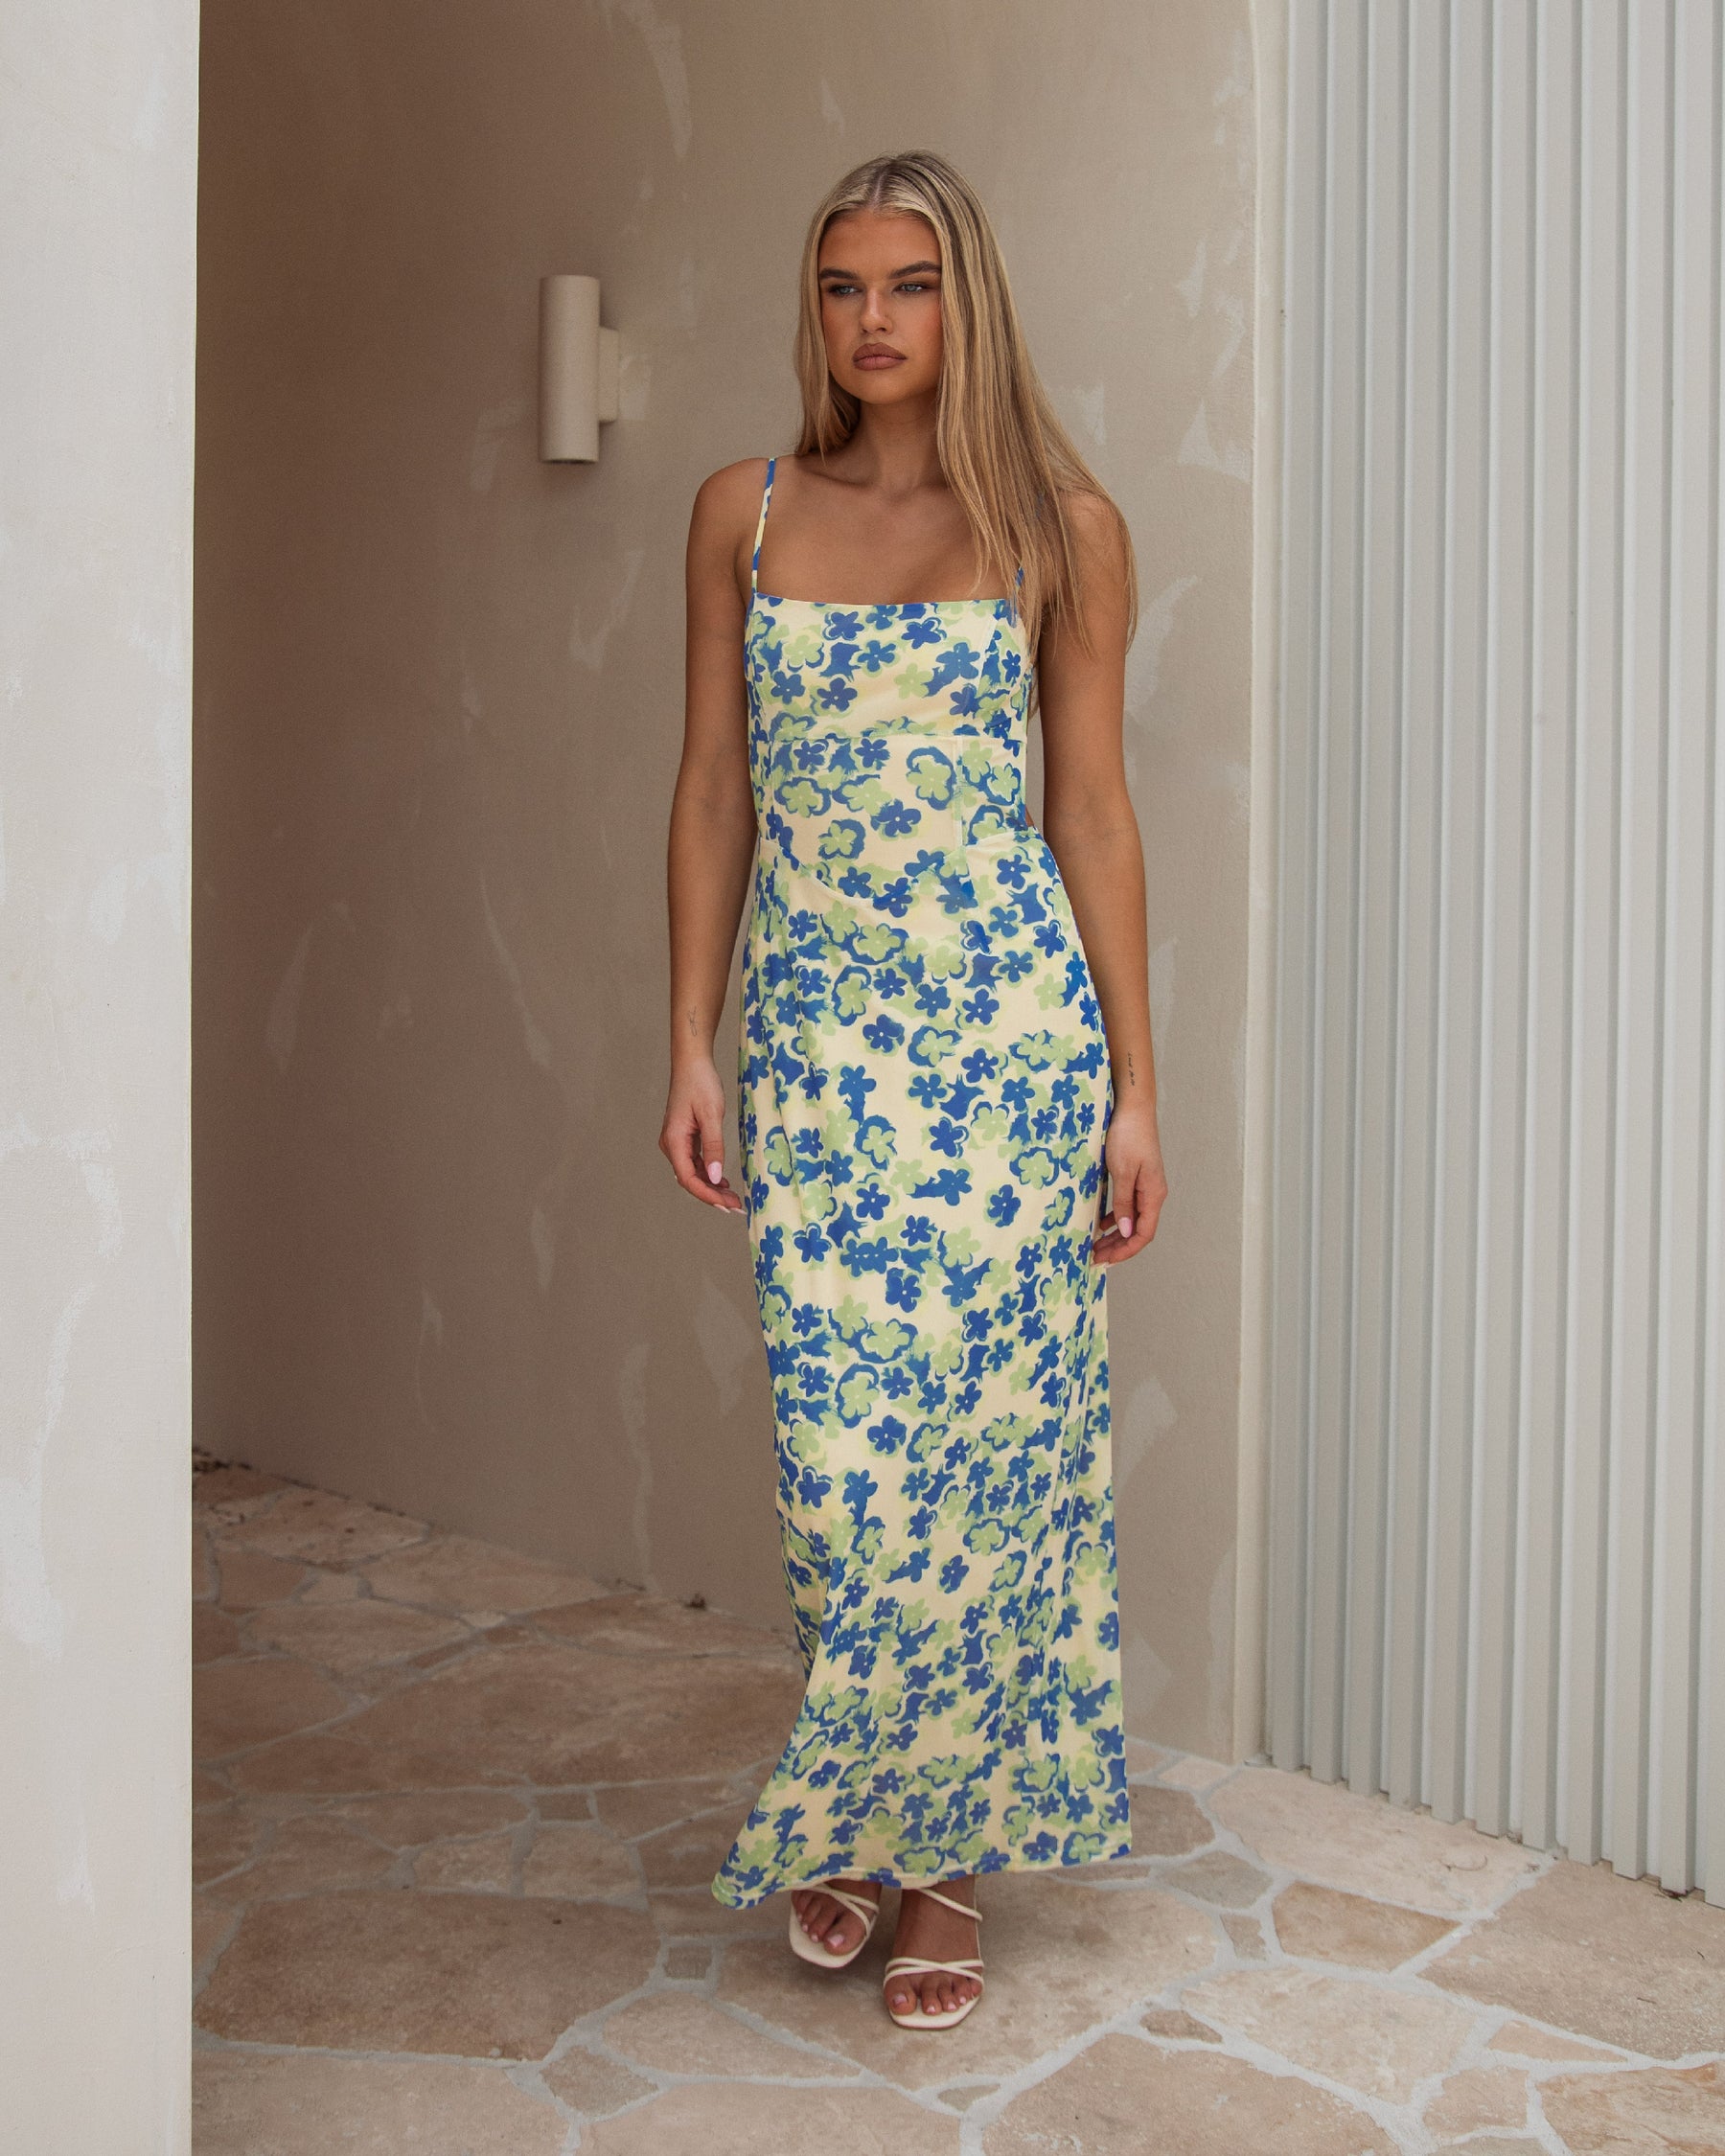 SABO  Shop Women's Summer Clothing Online Australia.